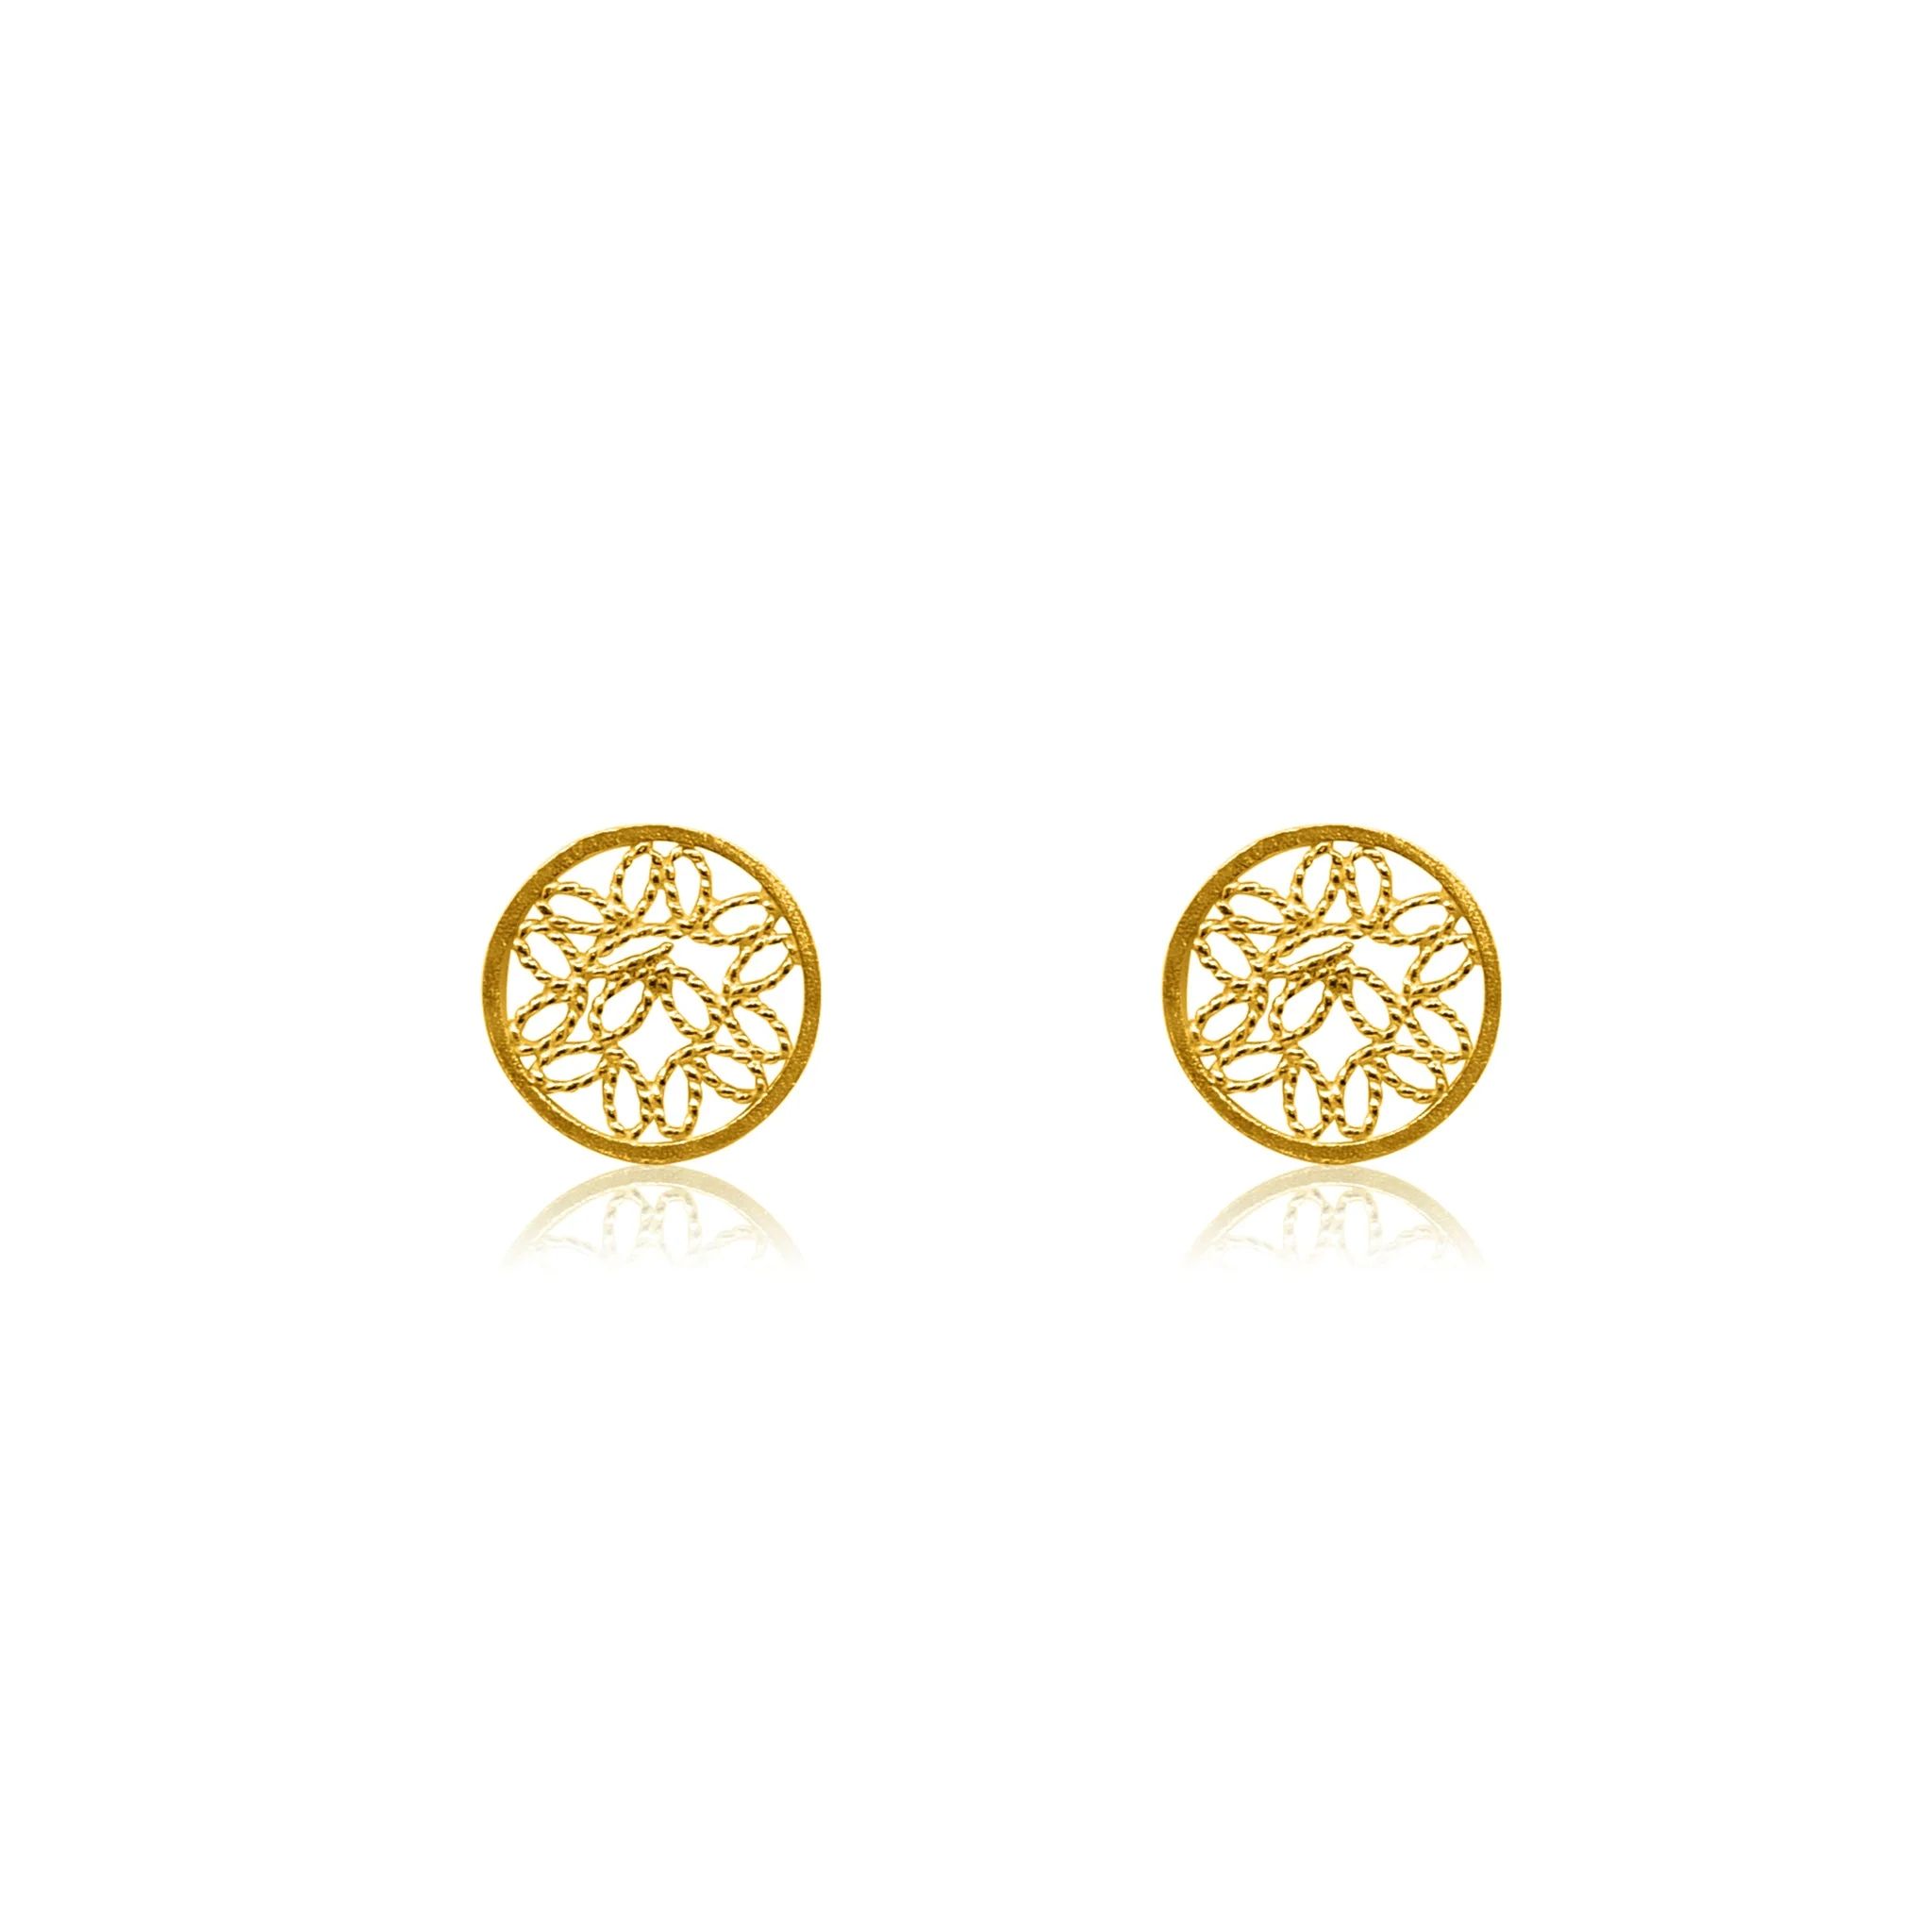 ALICE GOLD STUD EARRINGS FILIGREE | Olmox Jewelry